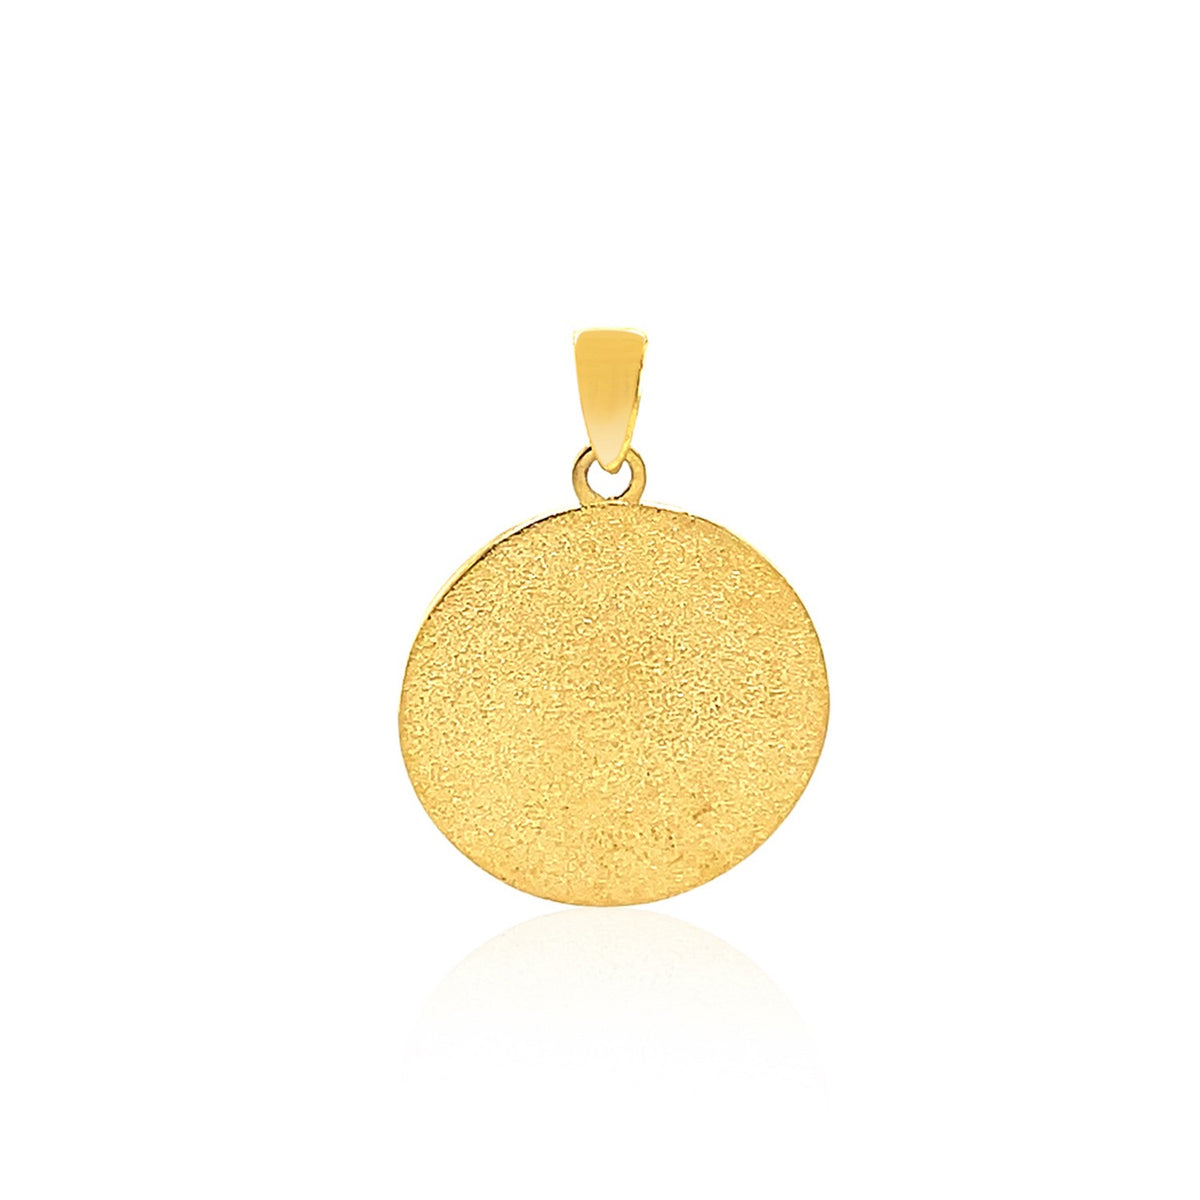 Round Textured Religious Medal Pendant - 14k Two Tone Gold